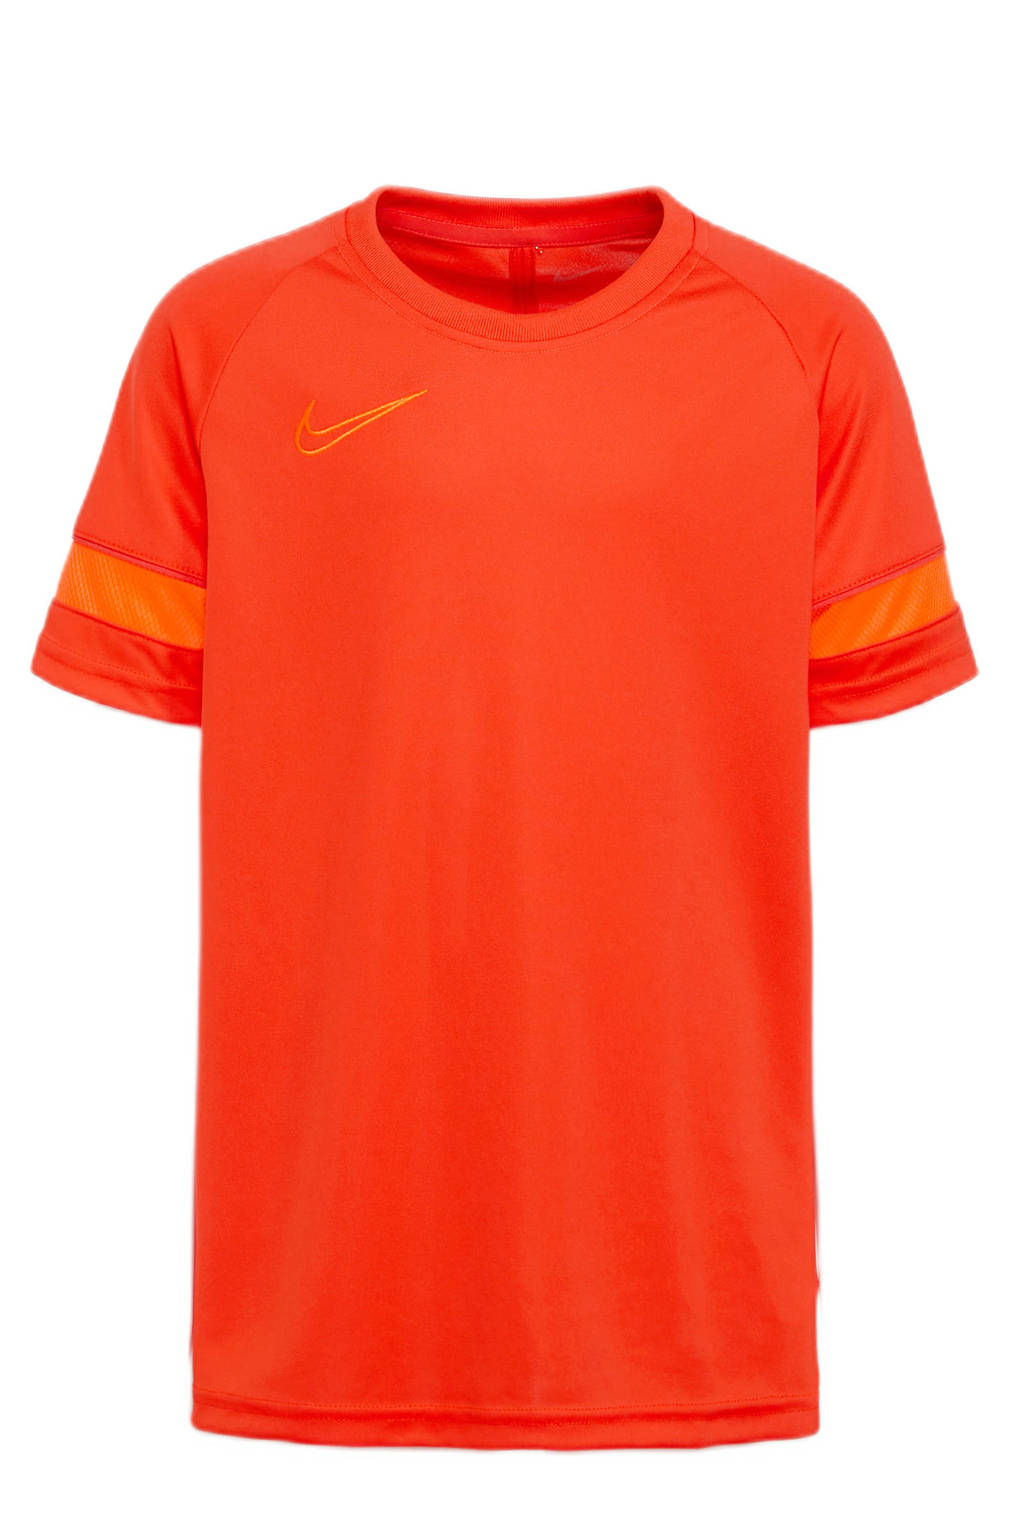 Nike Junior  voetbalshirt oranje, Oranje